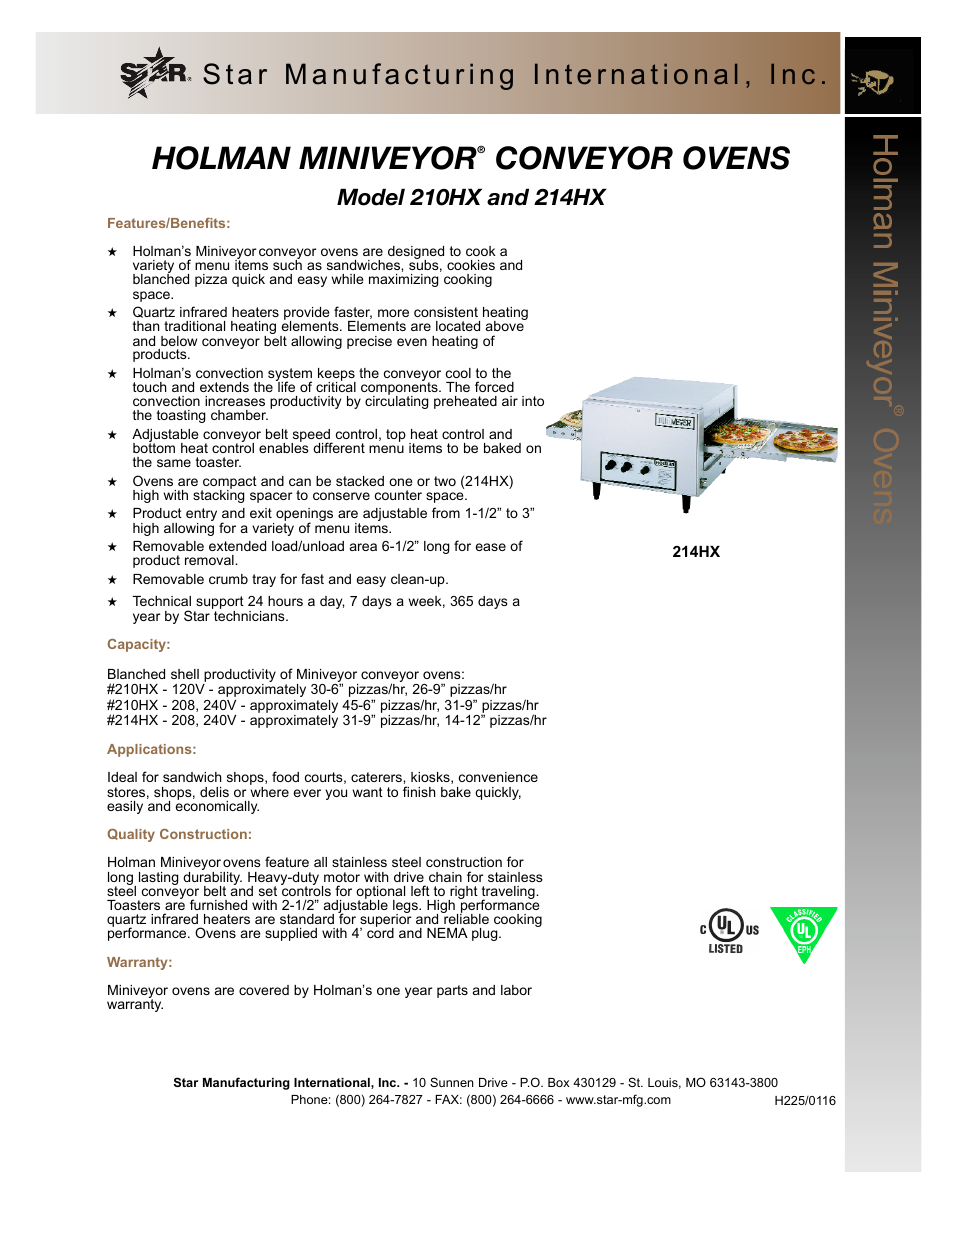 Holman Miniveyor 214HX